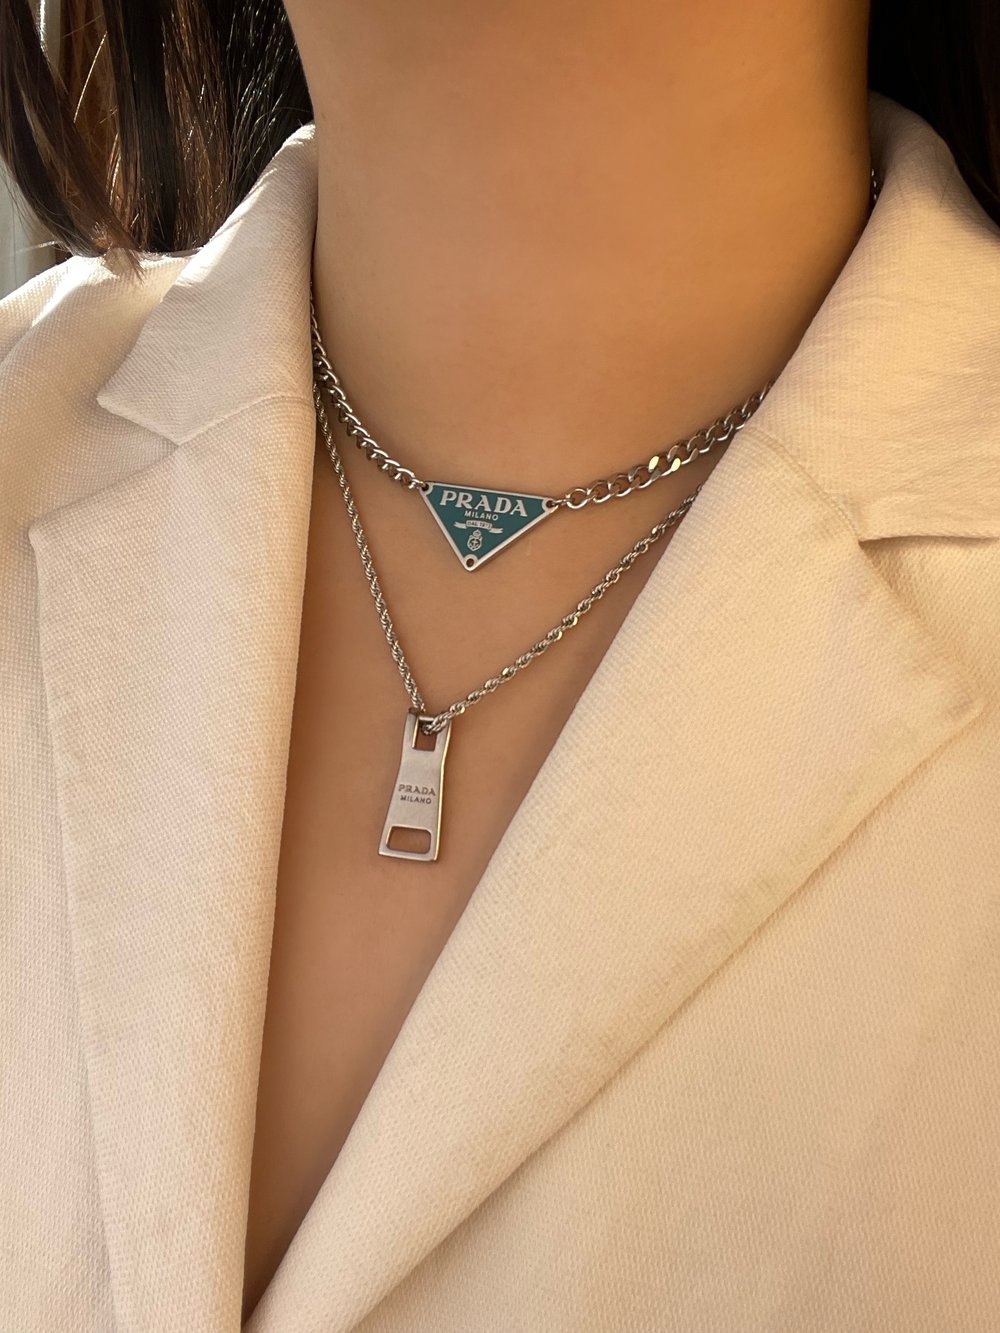 Authentic Gucci Zipper Pull Repurposed Necklace